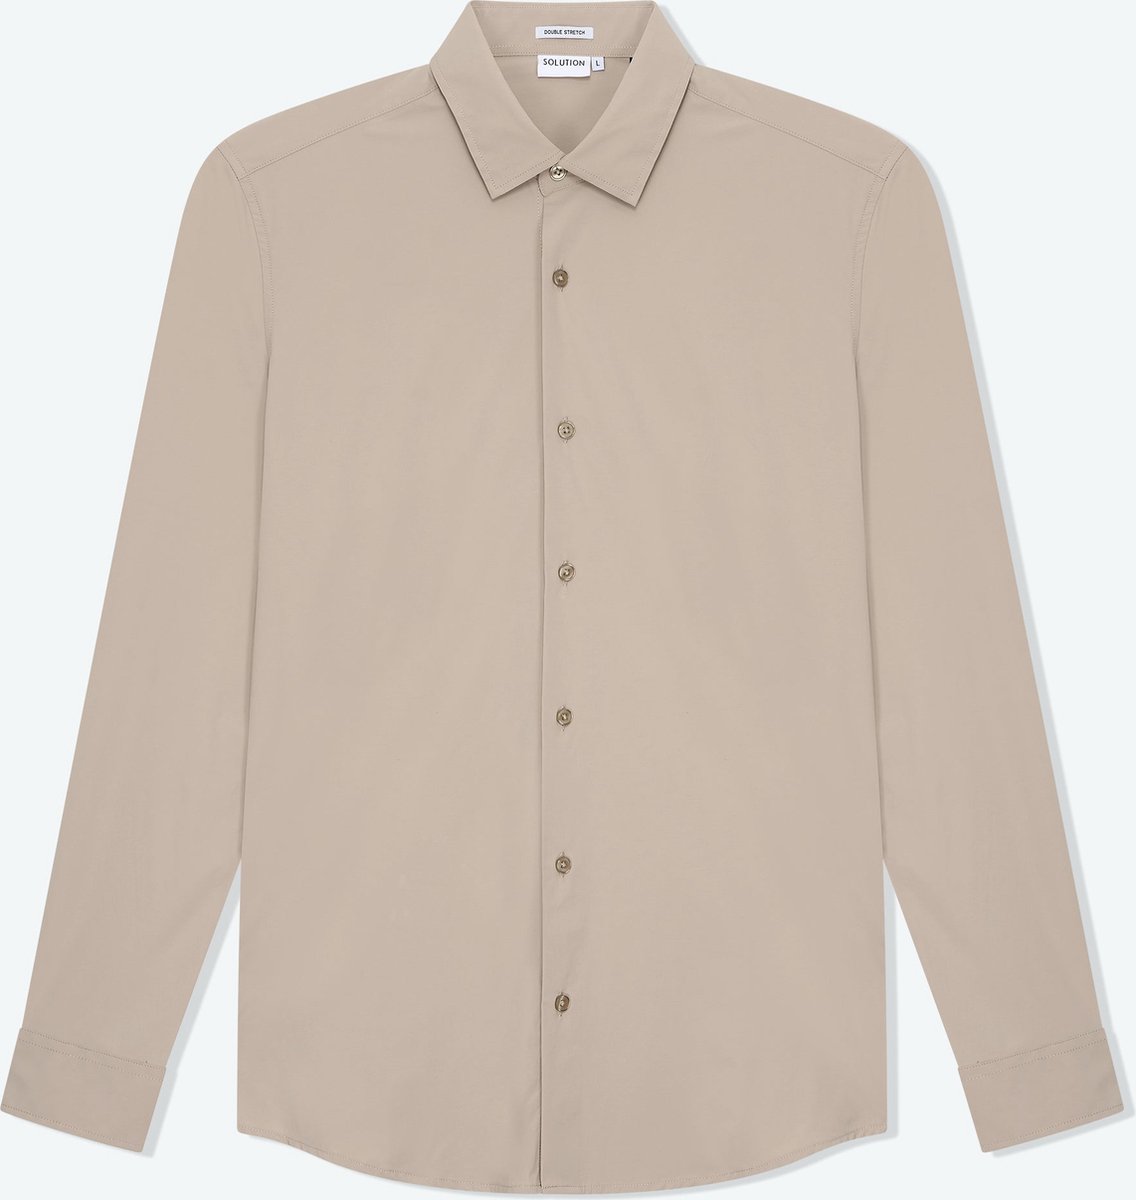 Solution Clothing Felix - Casual Overhemd - Kreukvrij - Lange Mouw - Volwassenen - Heren - Mannen - Beige - L - L - Solution Clothing